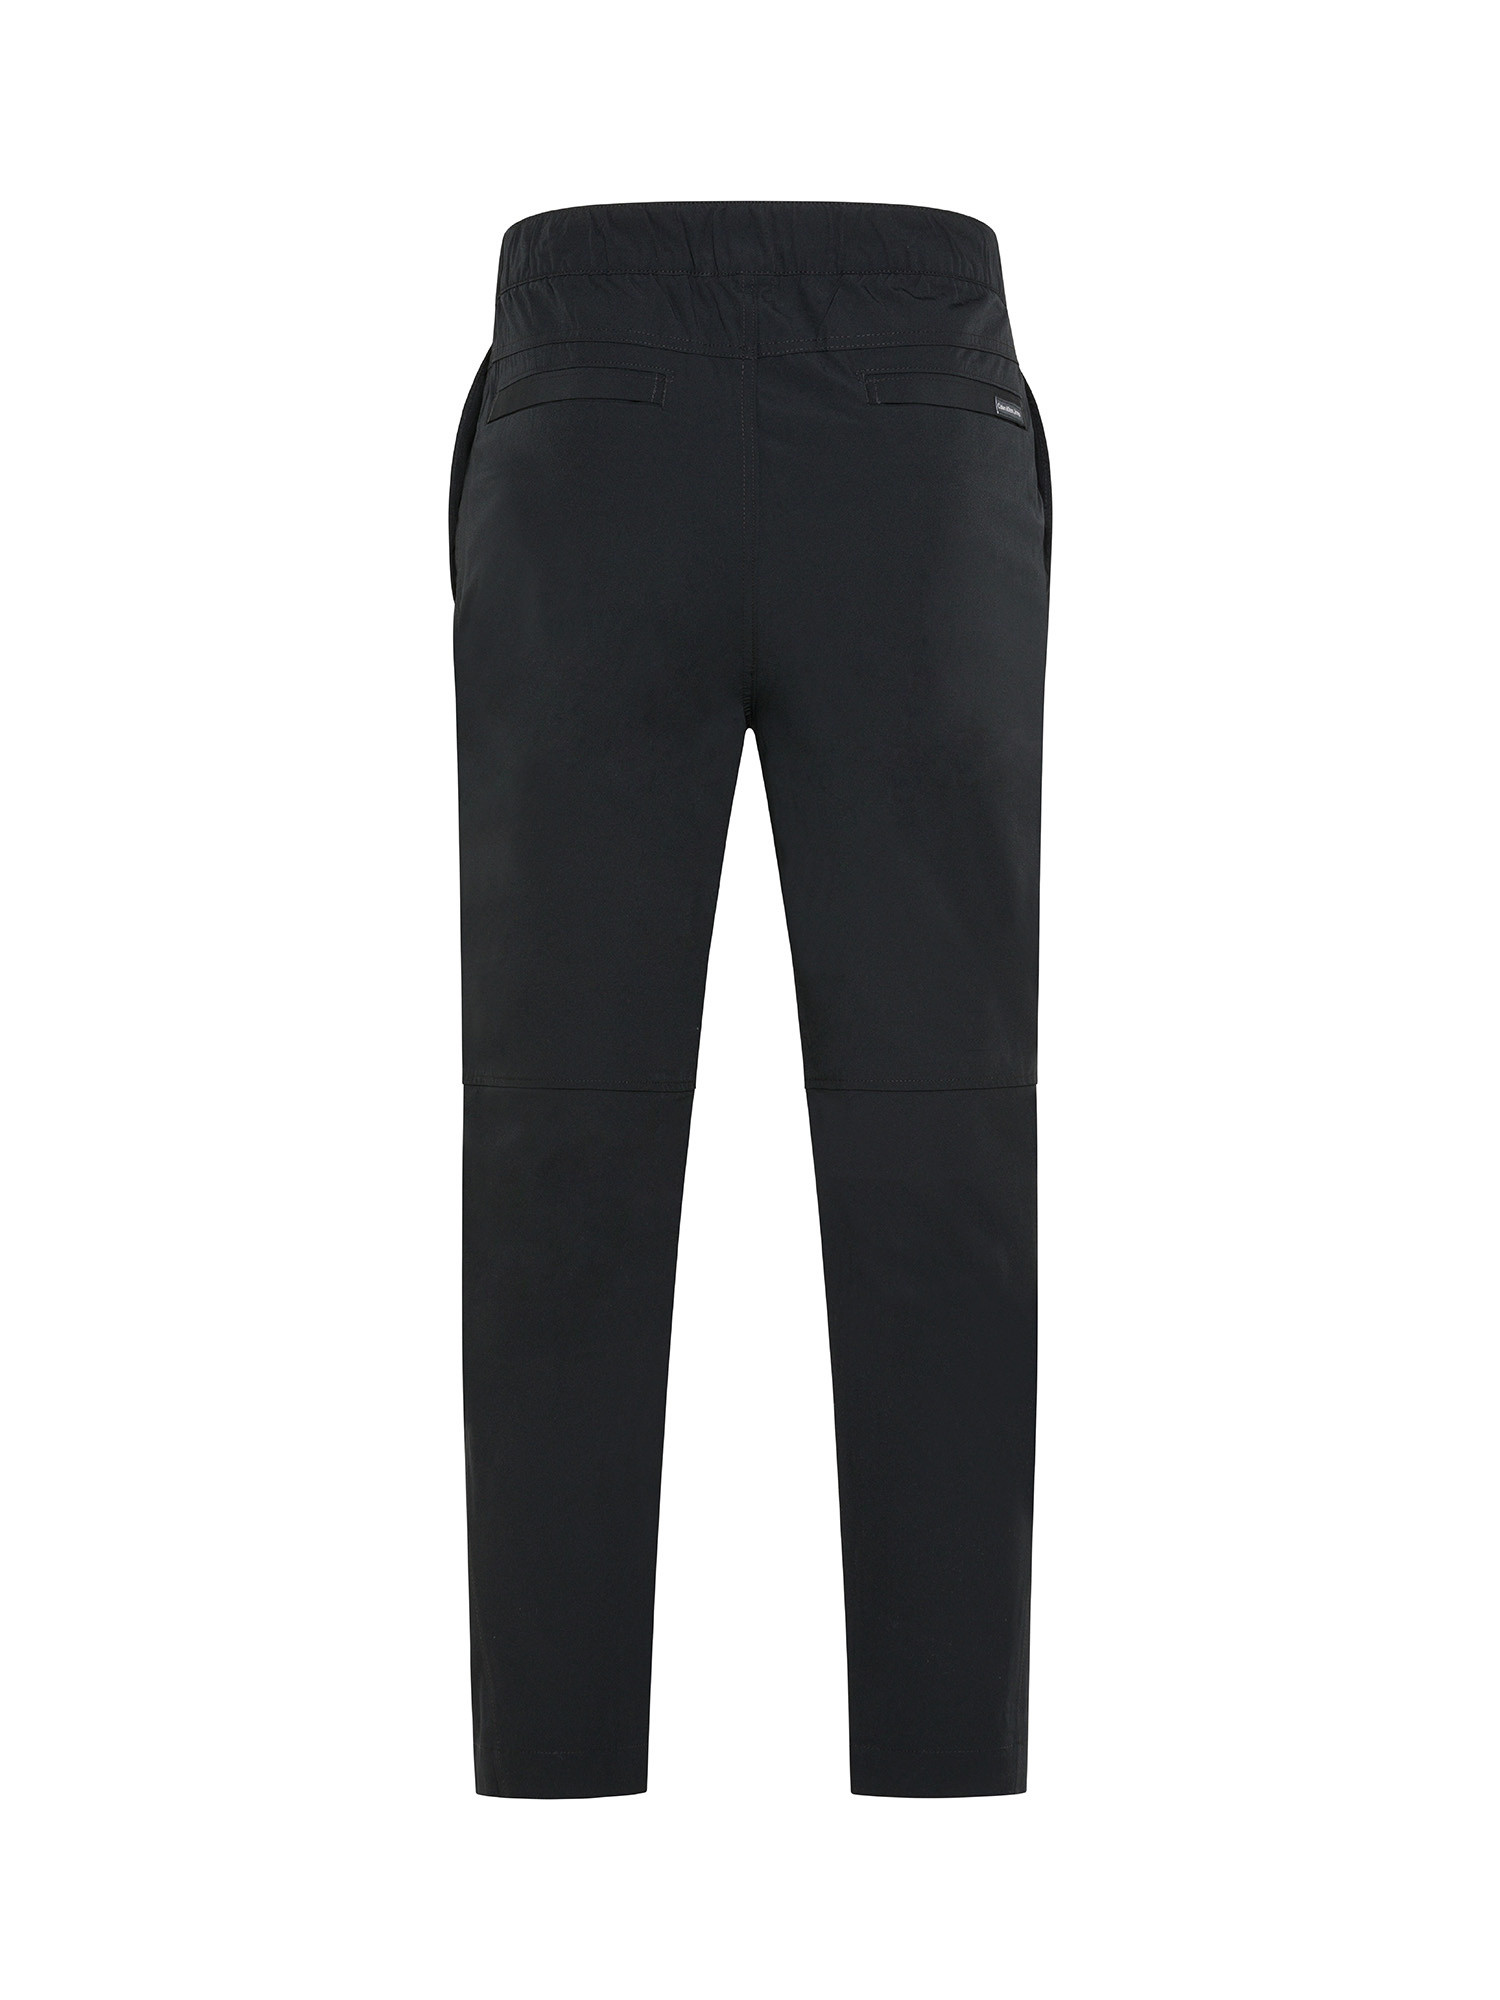 Calvin Klein Jeans - Sweatpants with logo, Black, large